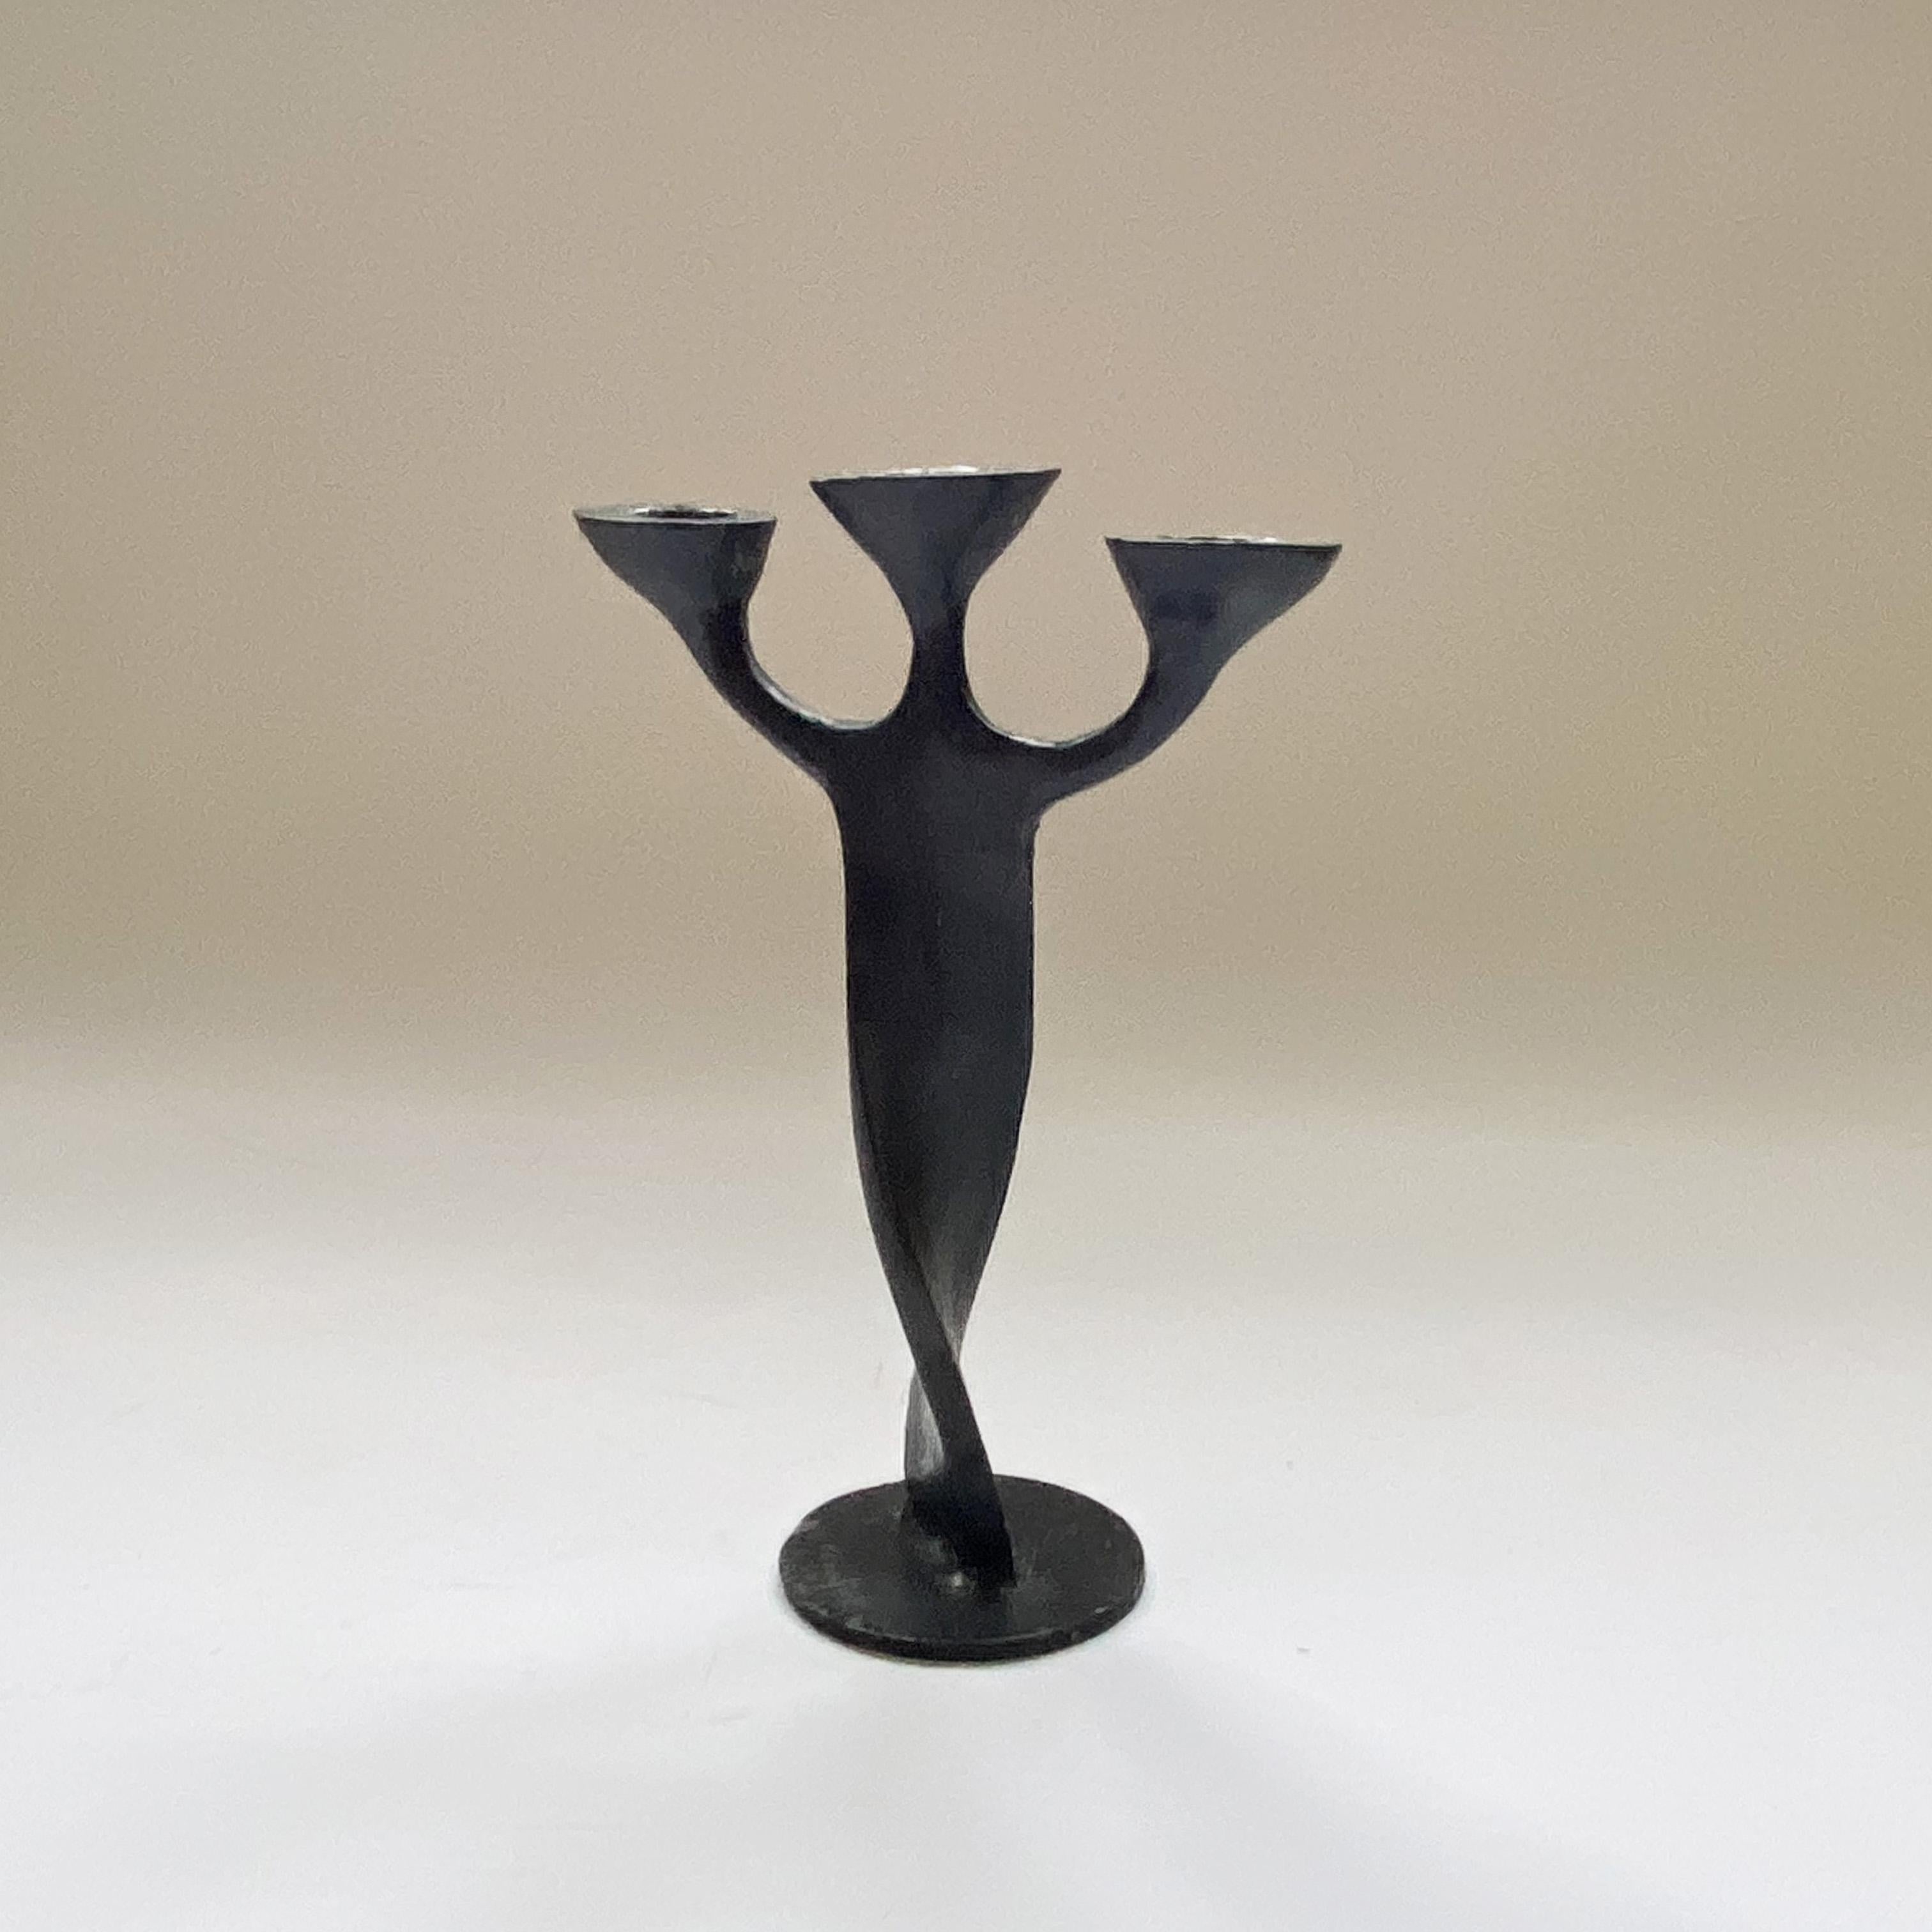 Patinated Aluminium Cast Sculptural Candlestick by Carlos Peñafiel for Fondica, 1990s.